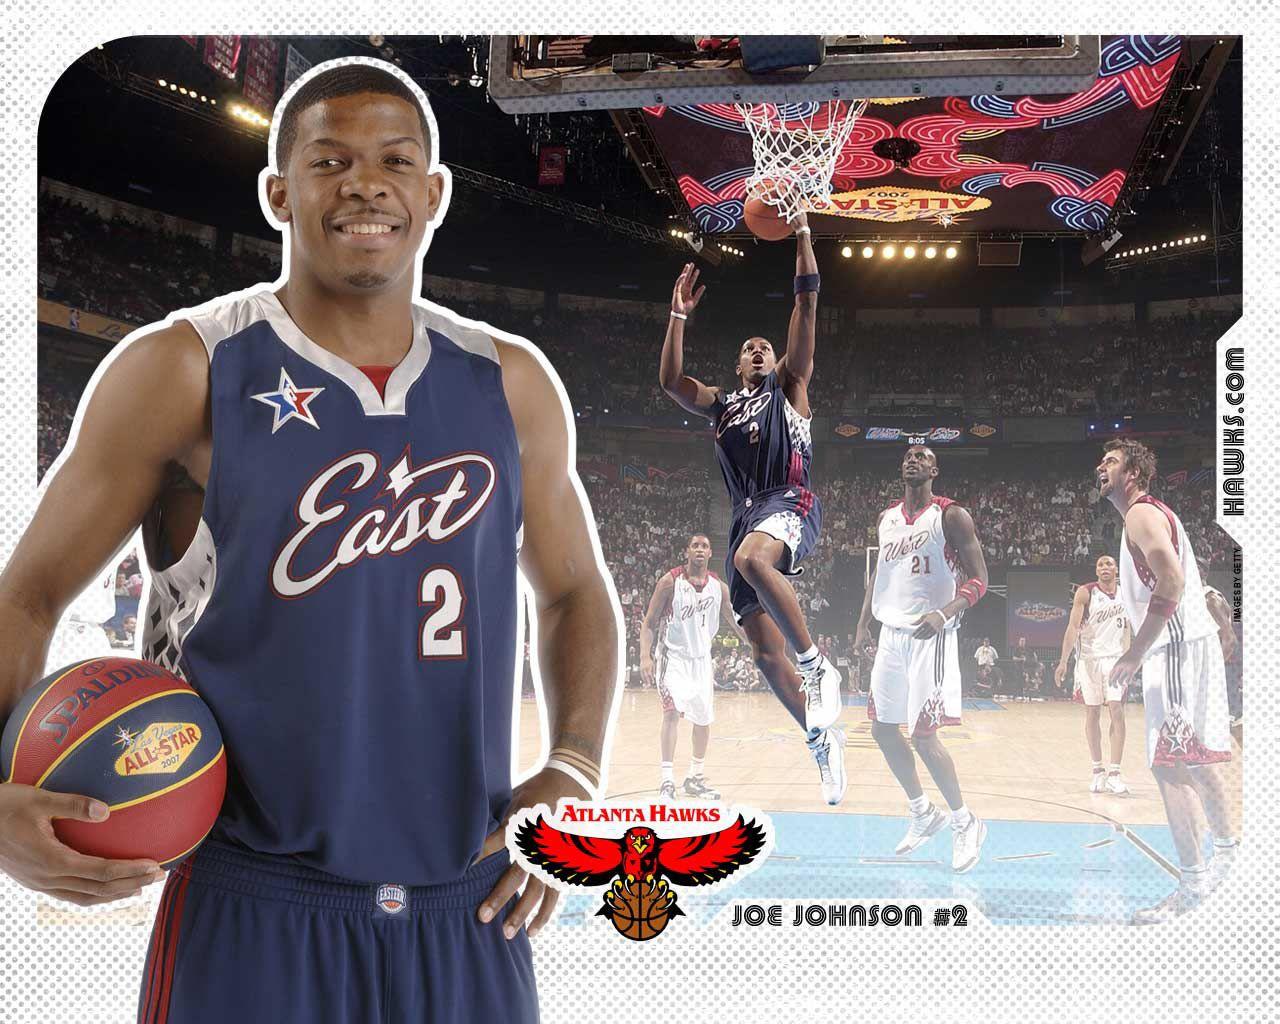 Joe Johnson All Star 2007 Wallpaper. Basketball Wallpaper At